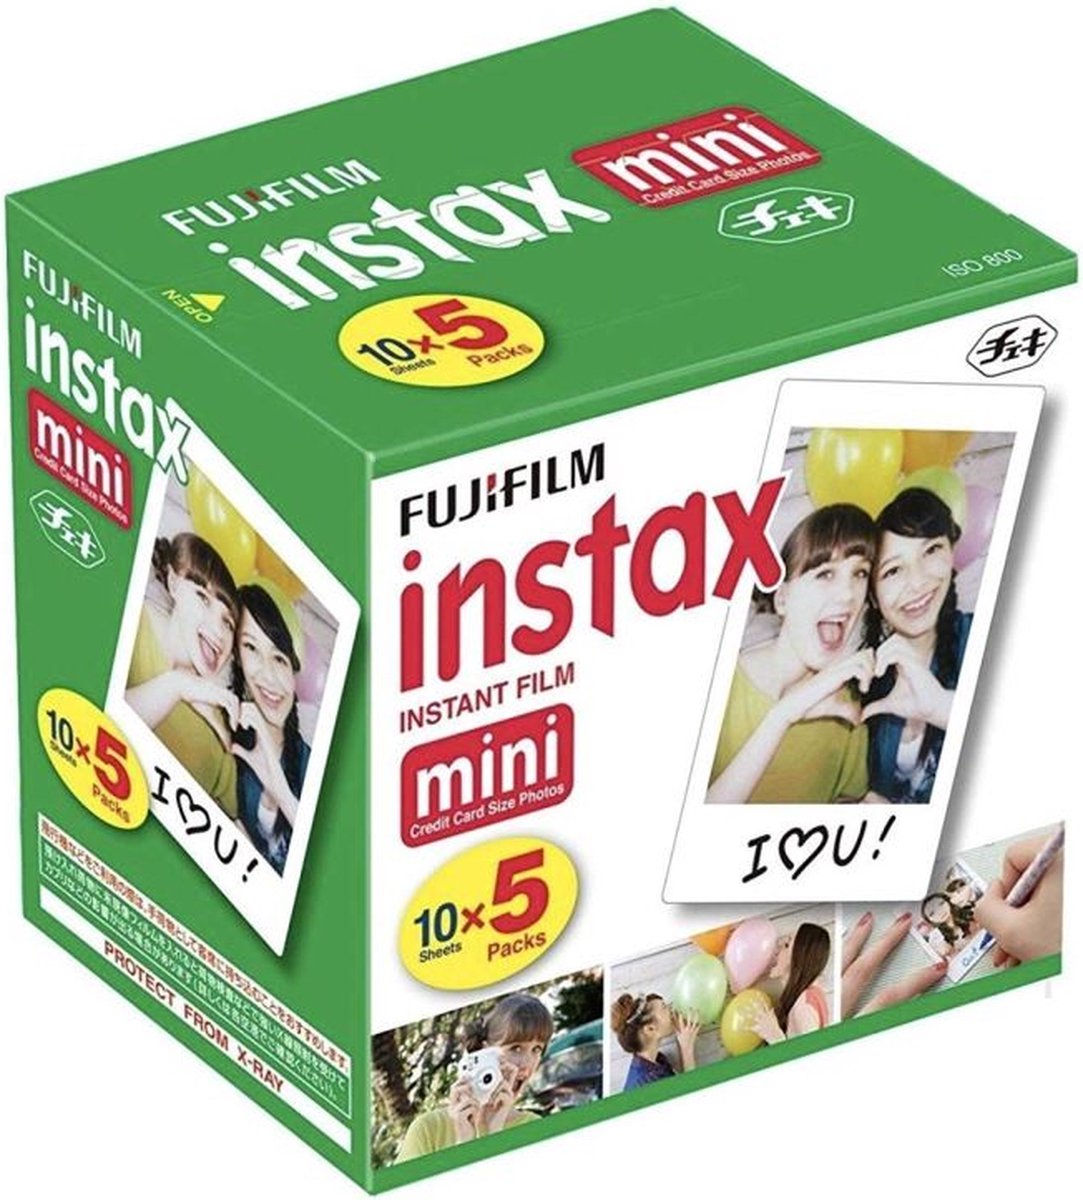 Pellicules Instax Mini de Fujifilm - Un paquet (10 pellicules)